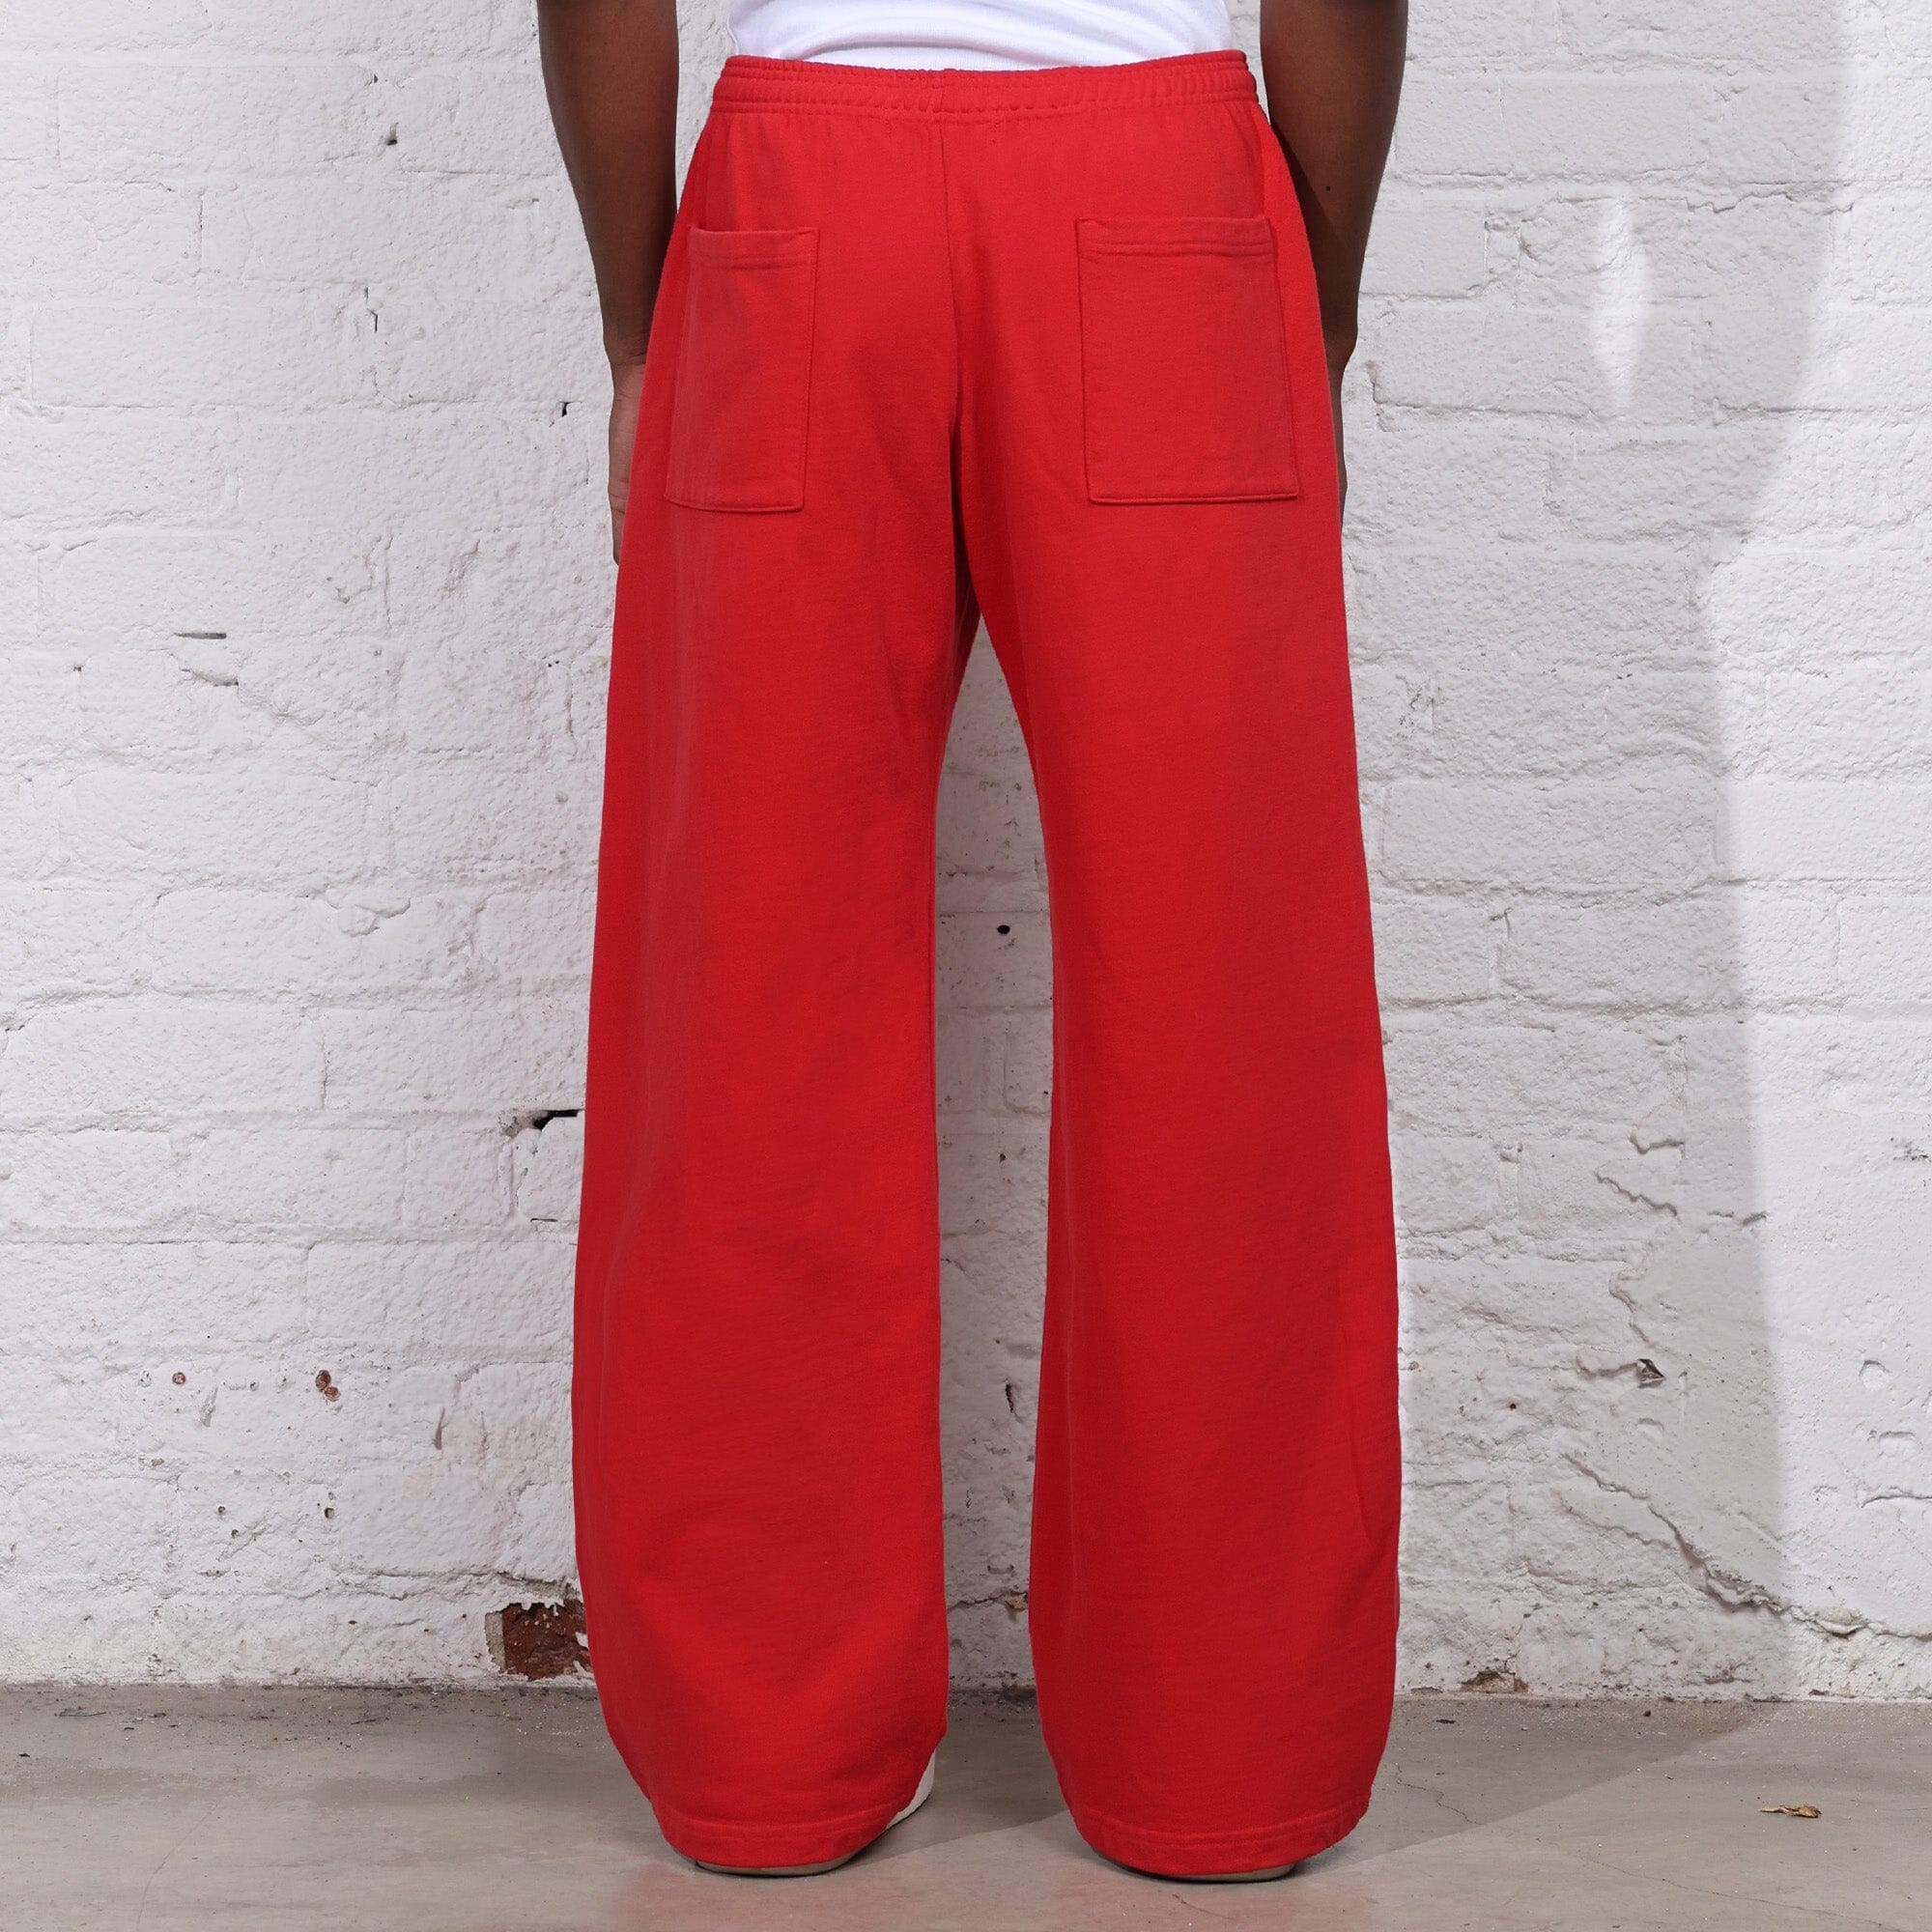 Lafayette Flare Studio Pants (Sweats) Cherry Red 